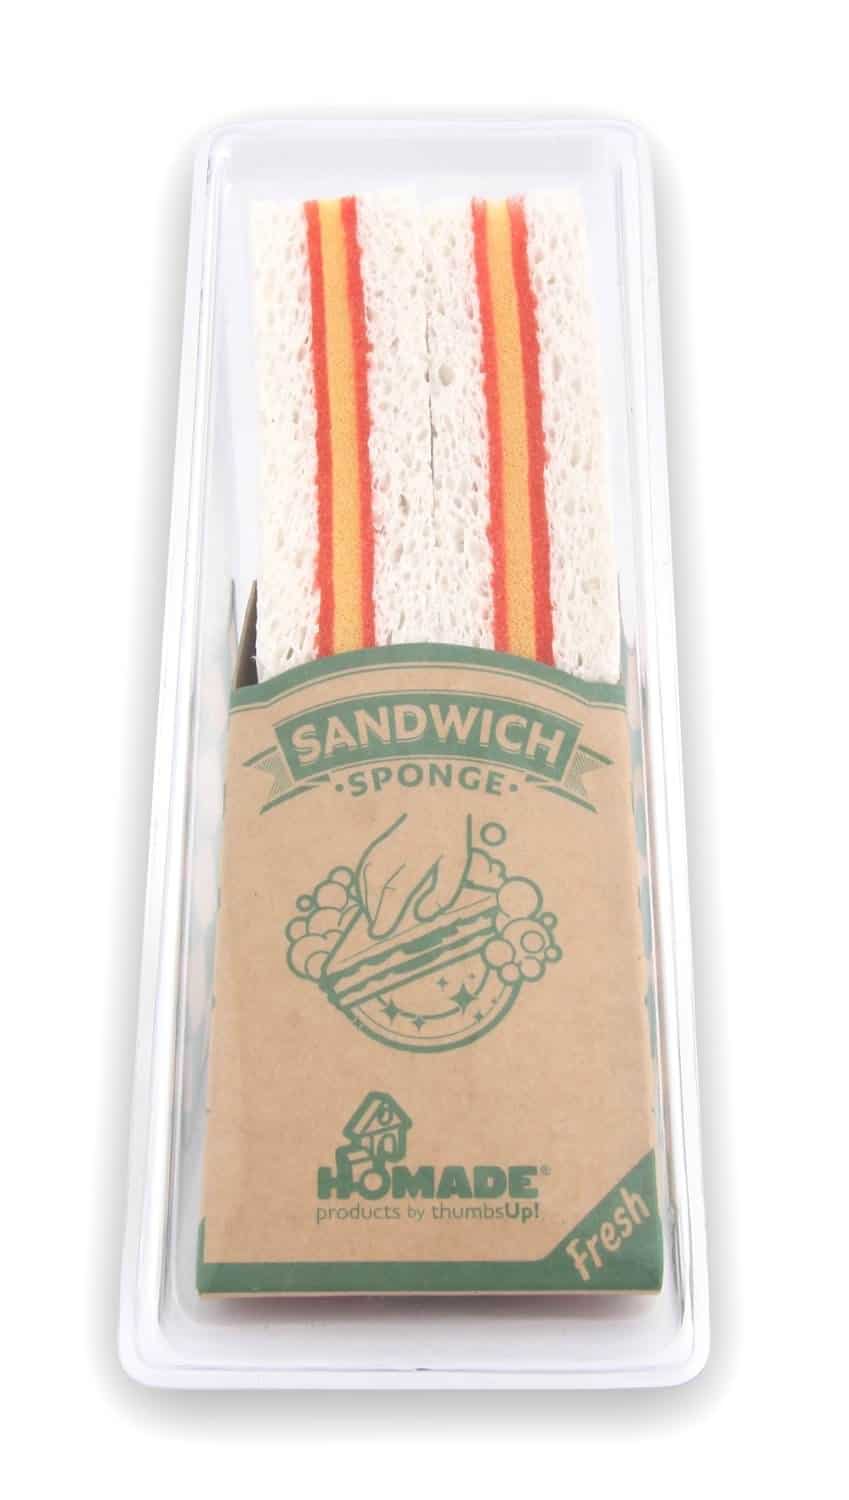 Thumbs Up 2-Pack Sandwich Sponge Interesting Packaging